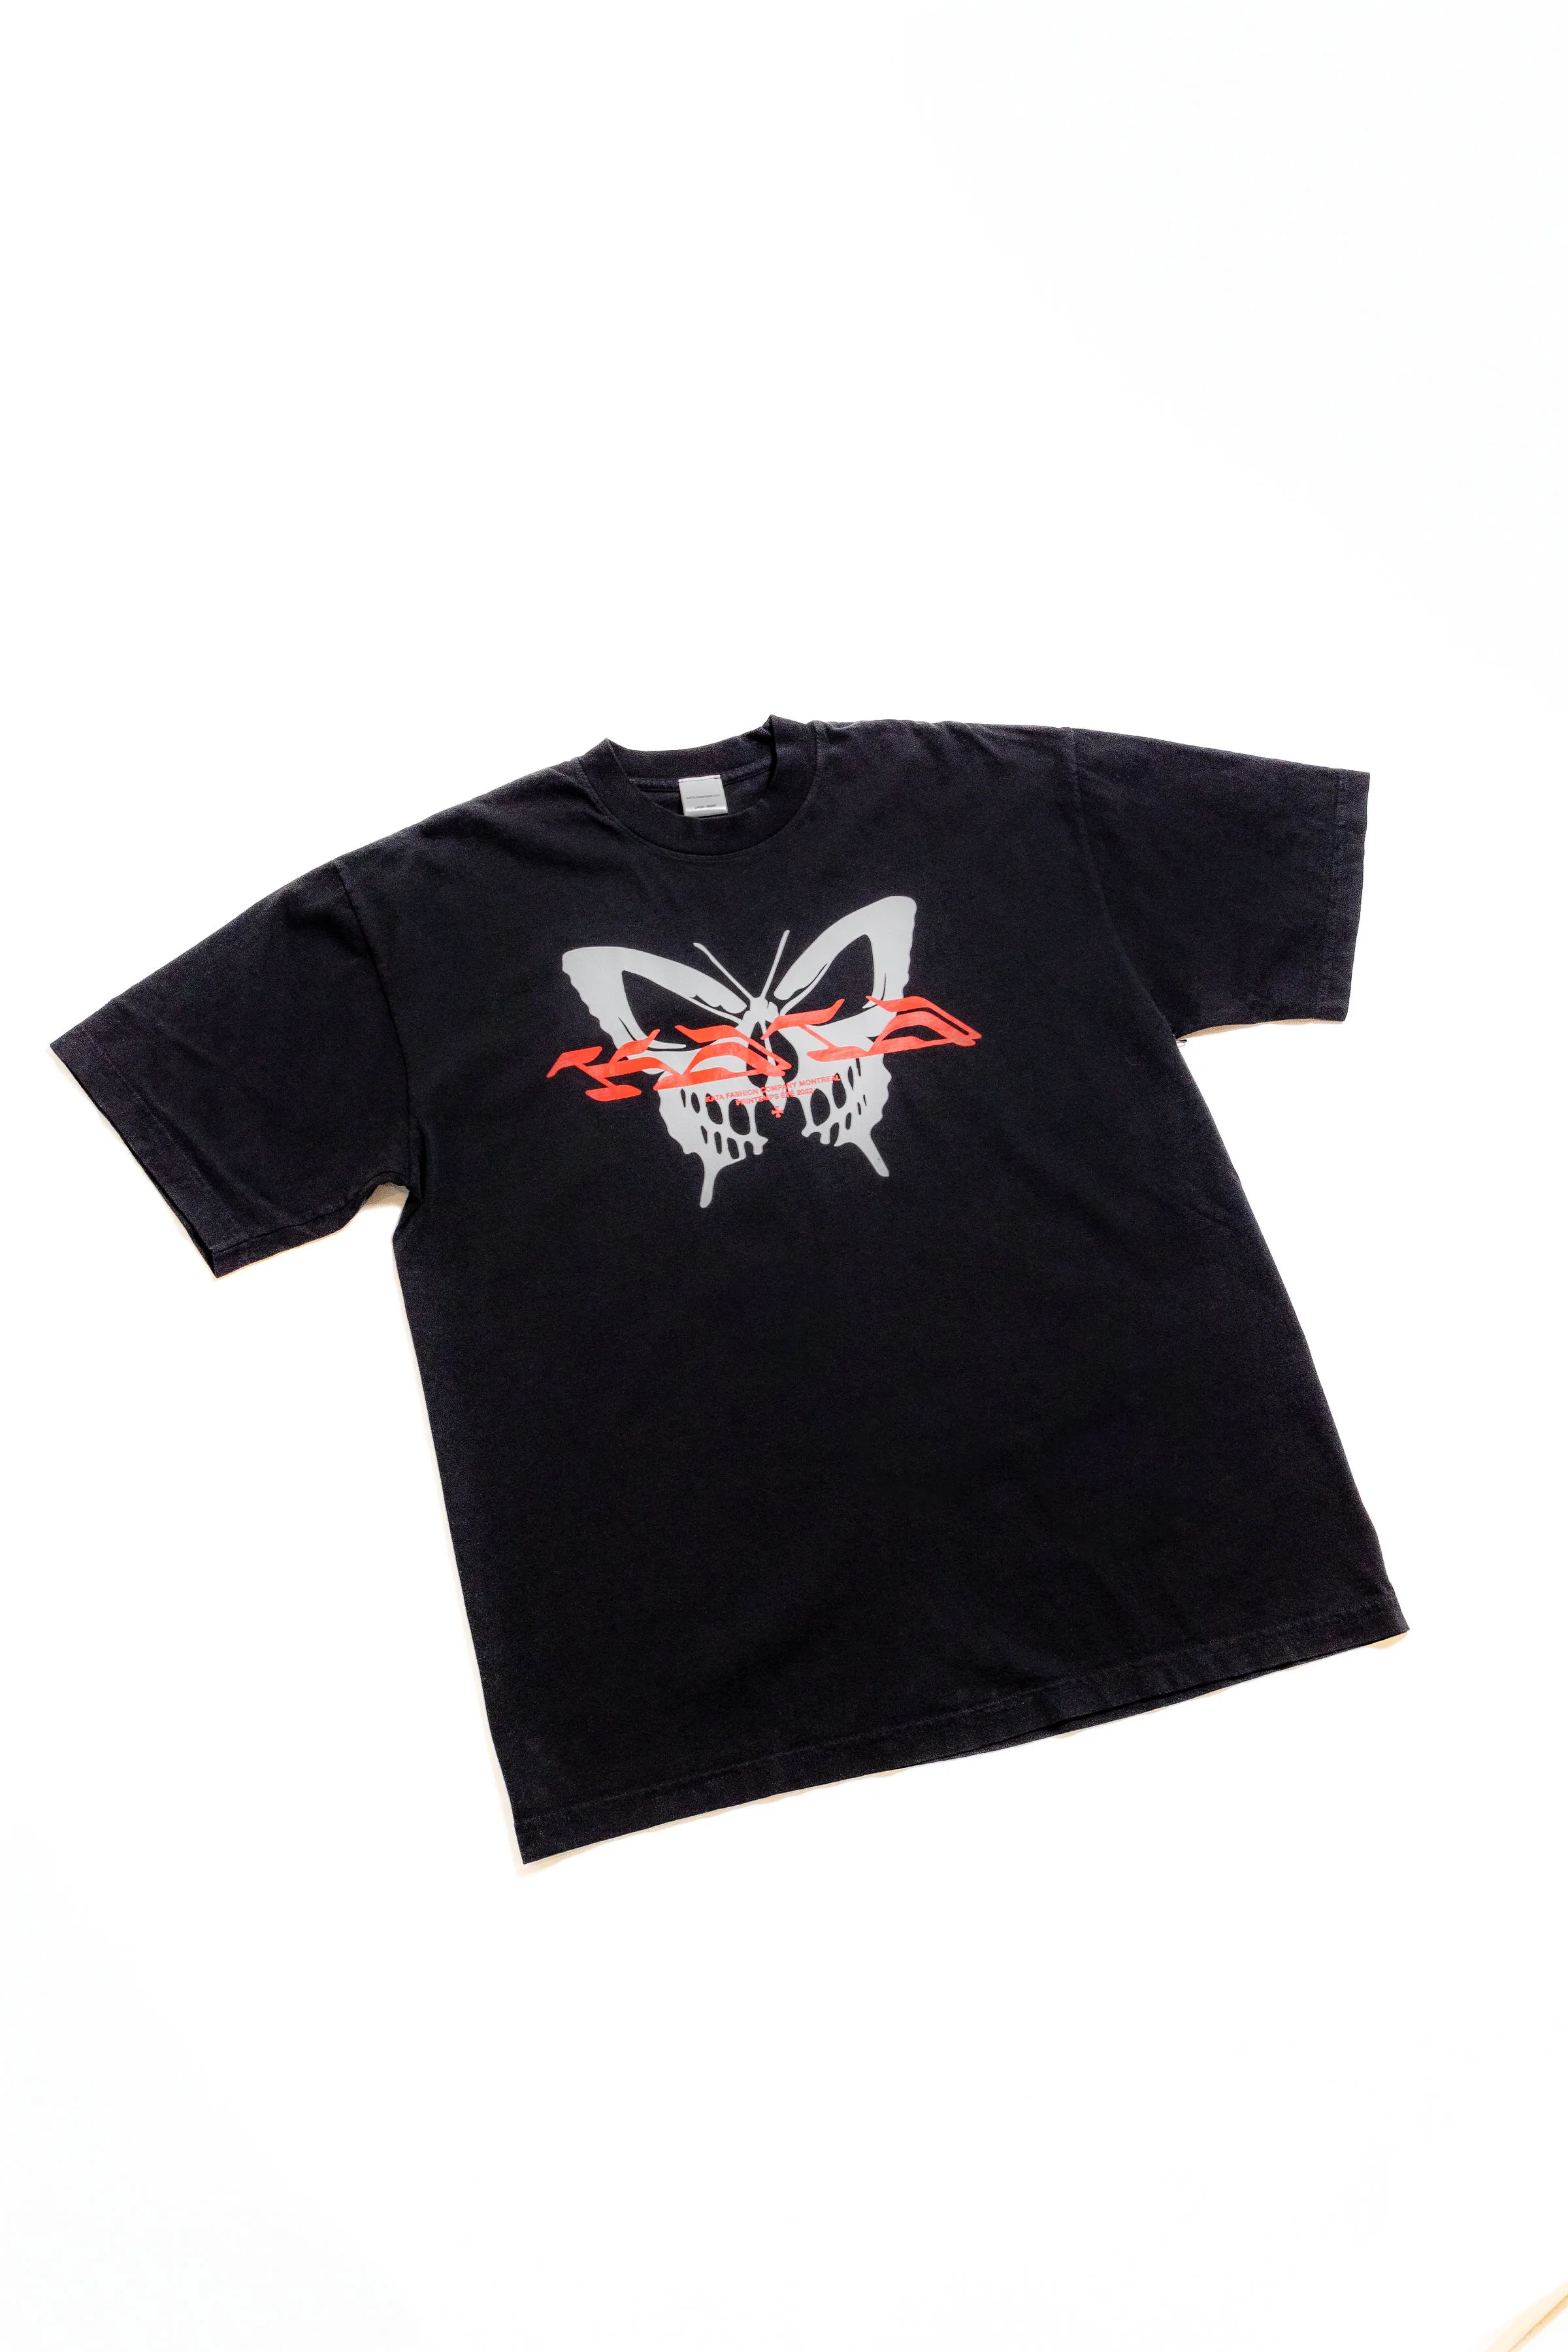 Butterfly killer t-shirt by Kata Fashion